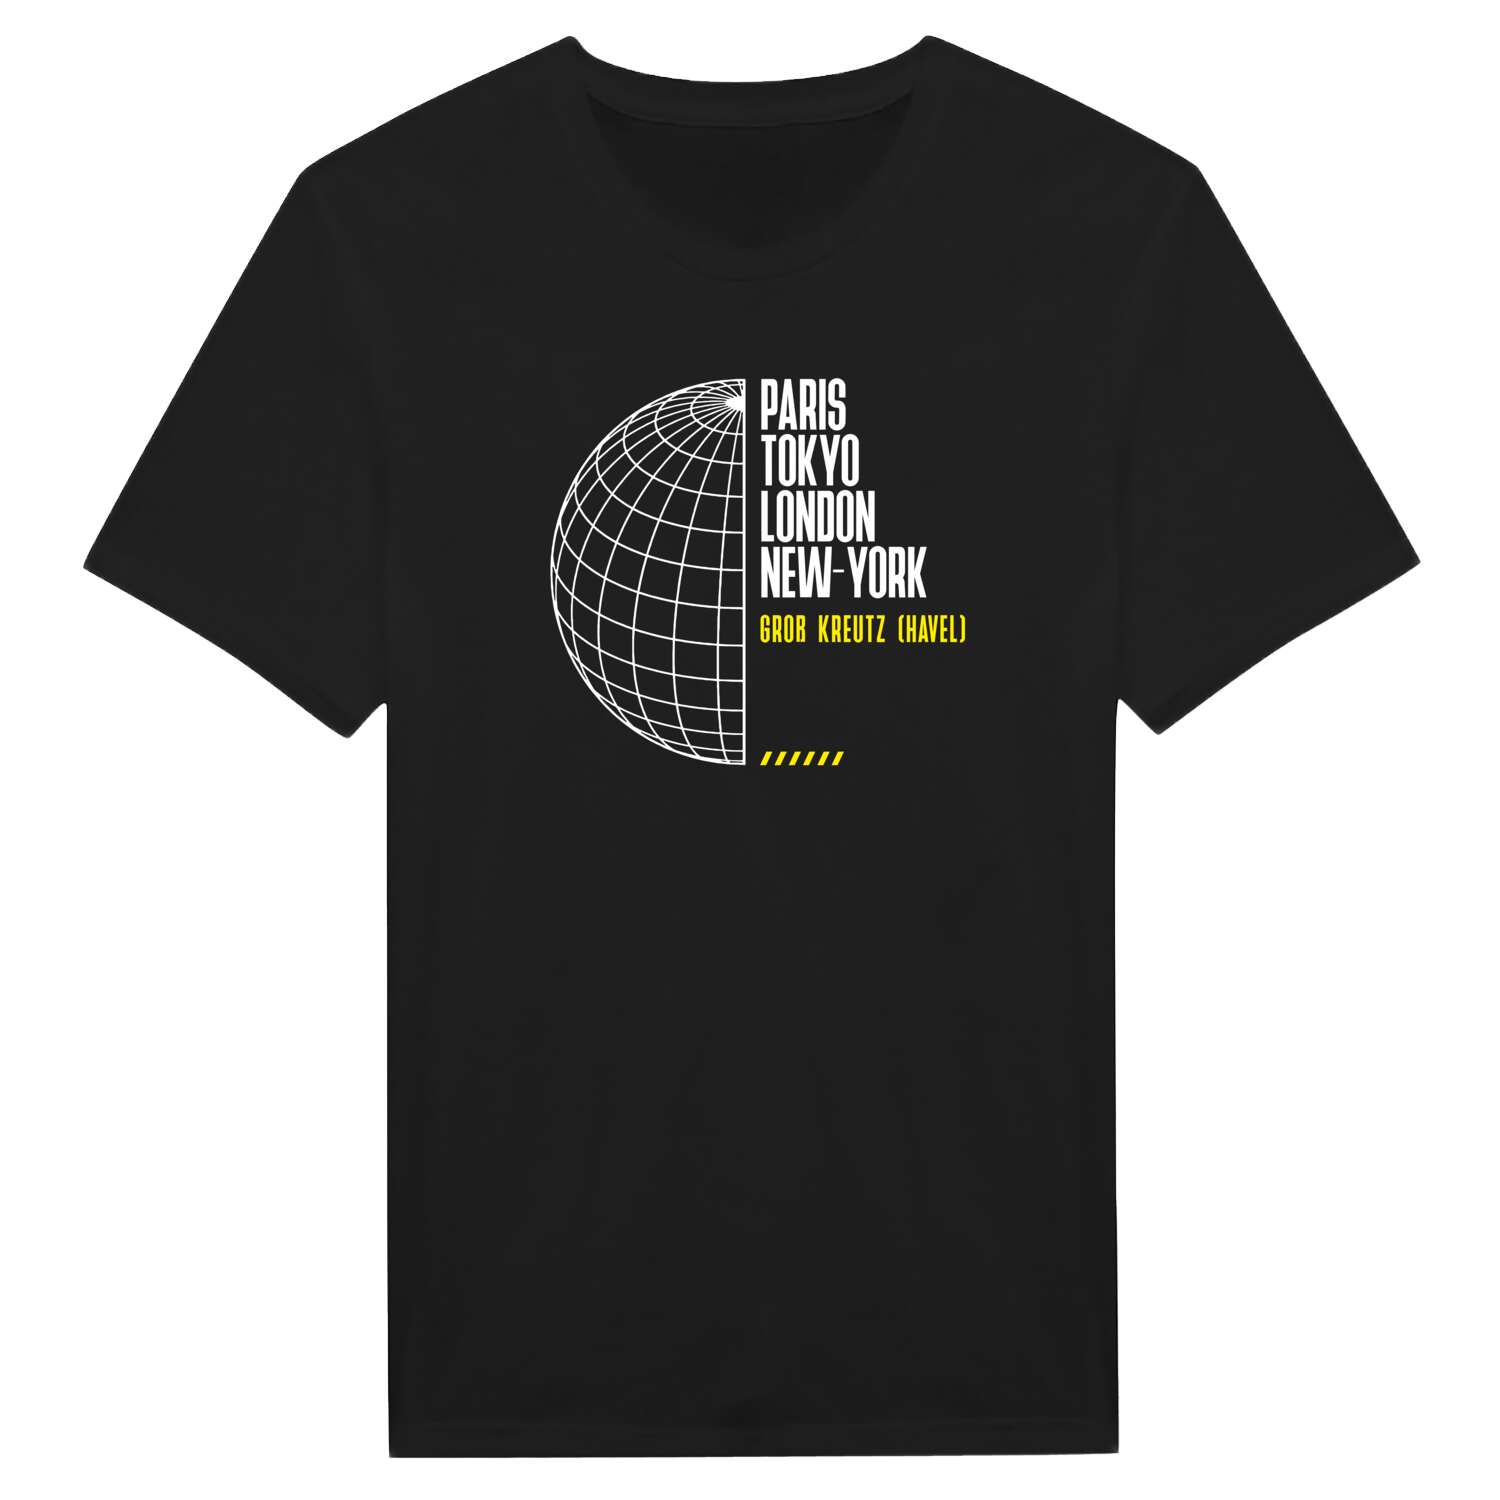 Groß Kreutz (Havel) T-Shirt »Paris Tokyo London«